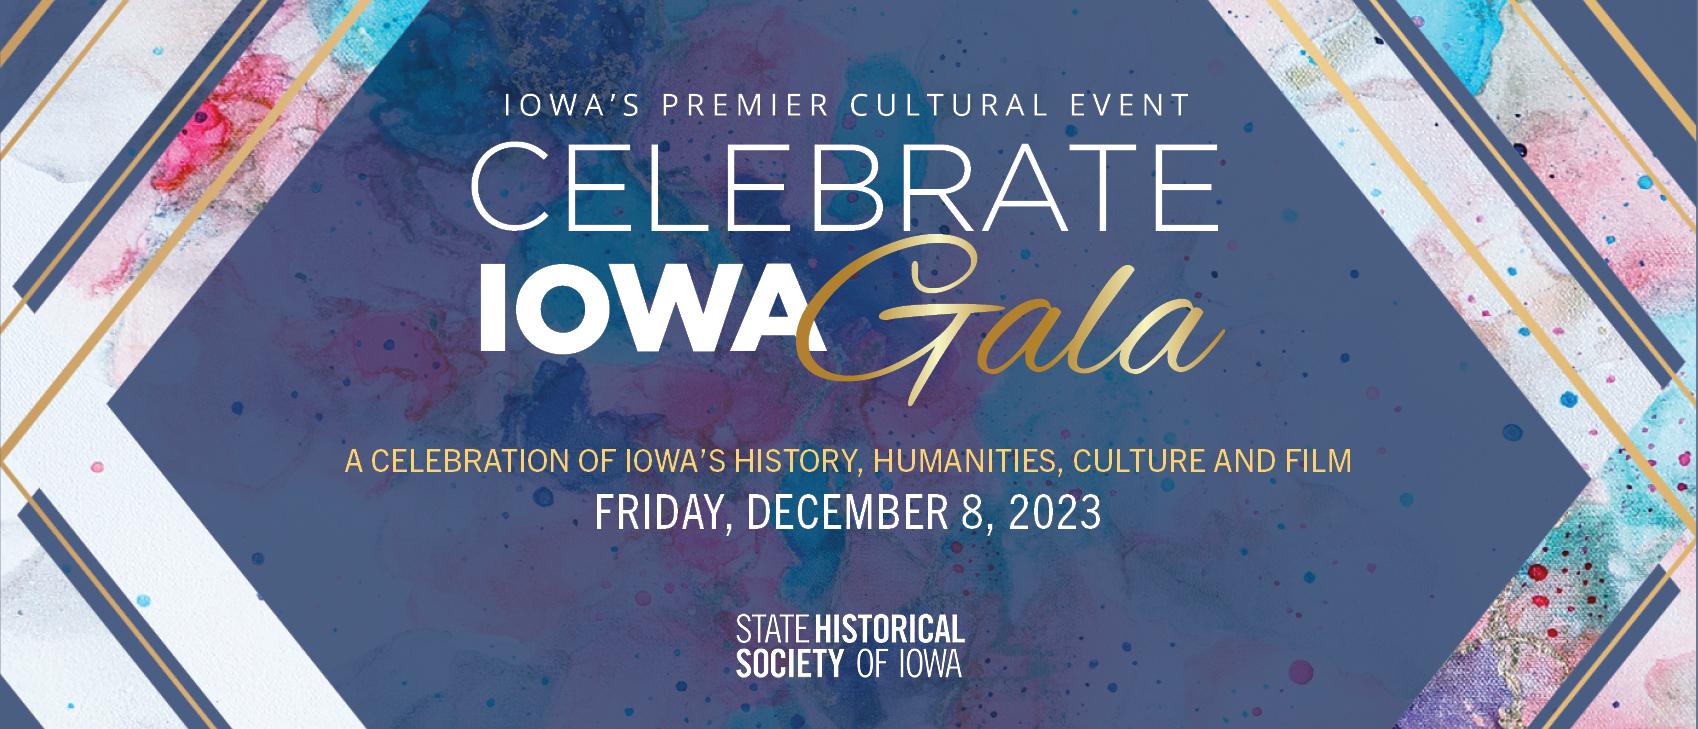 2023 Celebrate Iowa Gala Web banner